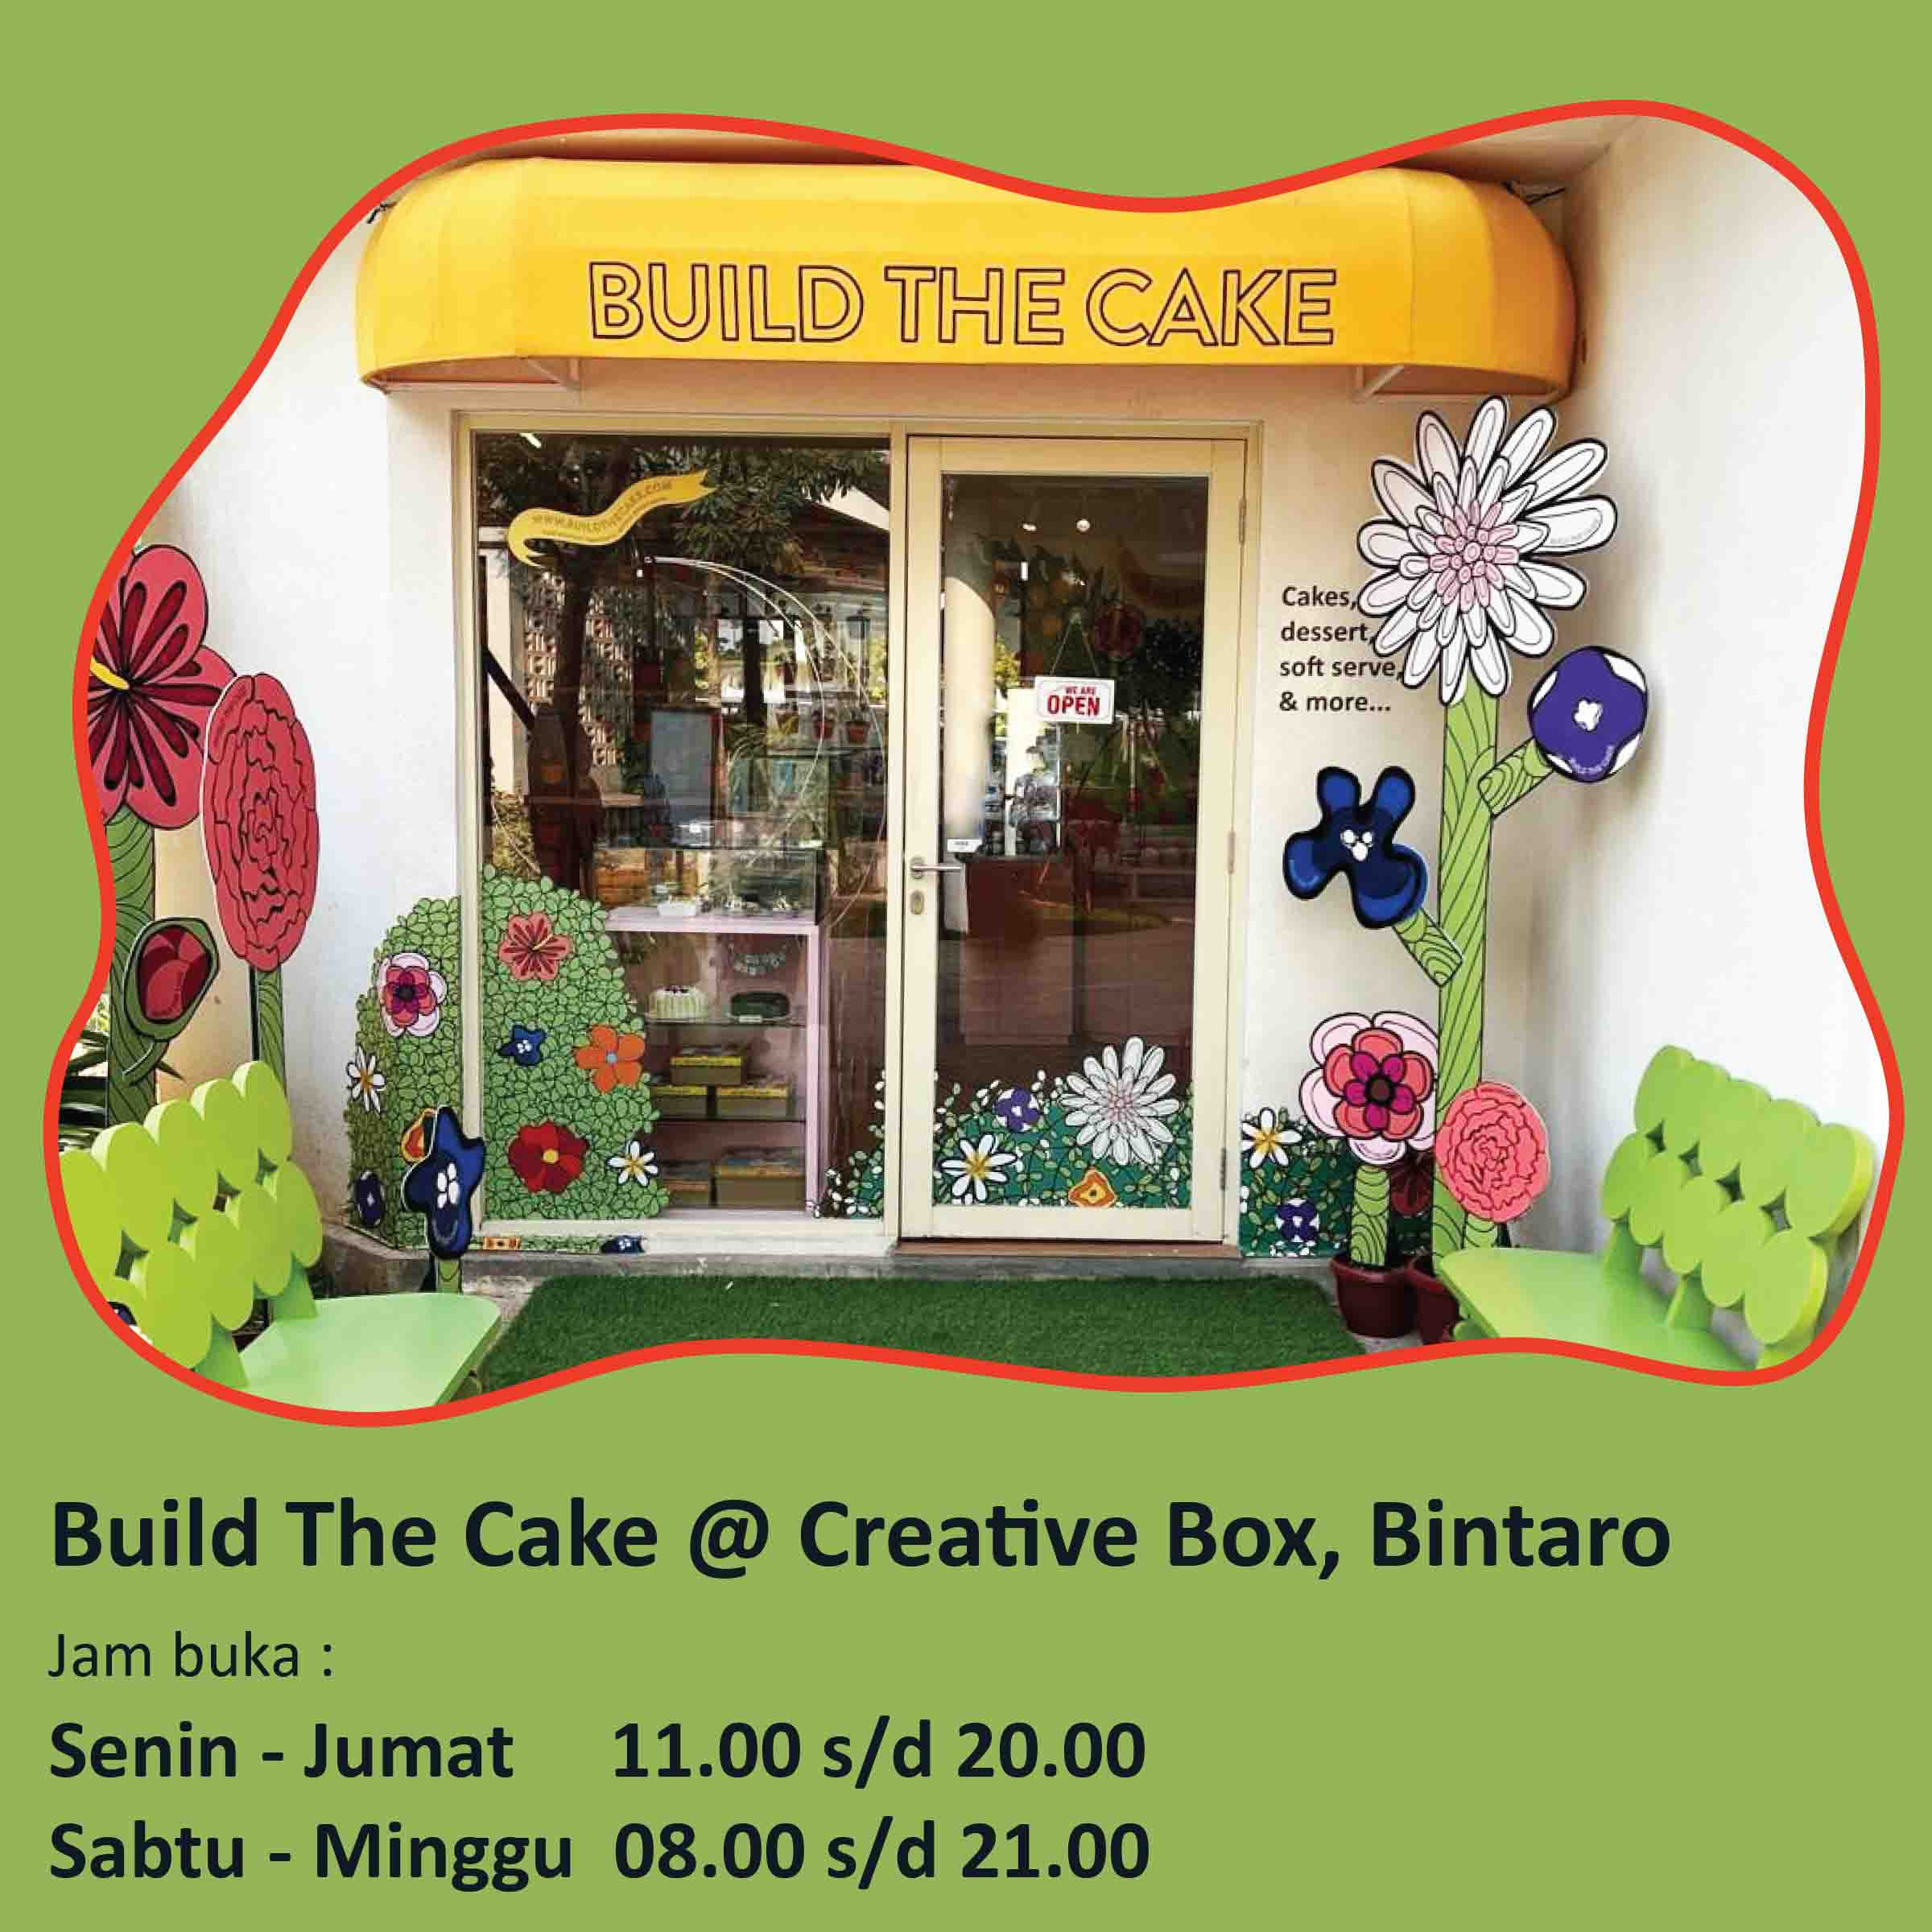 Build The Cake @ Creative Box